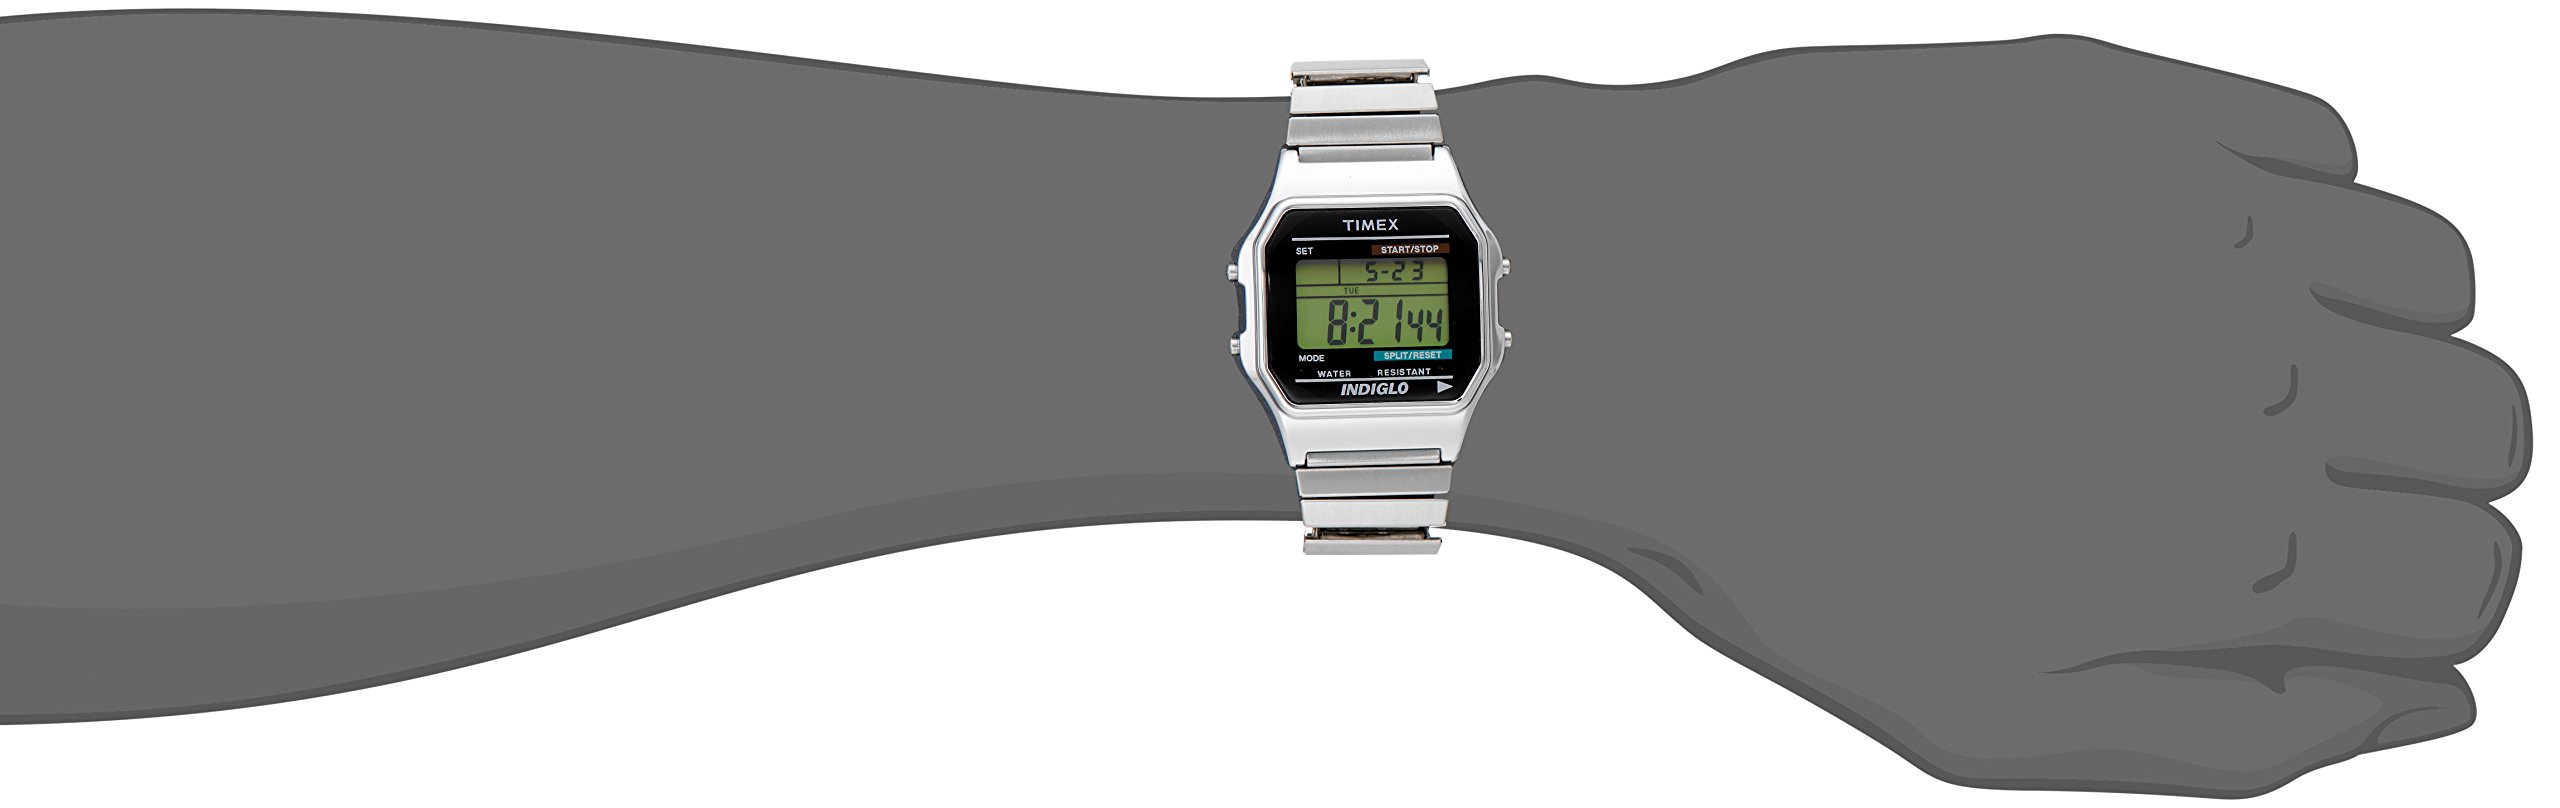 Timex Men's Classic Digital Watch